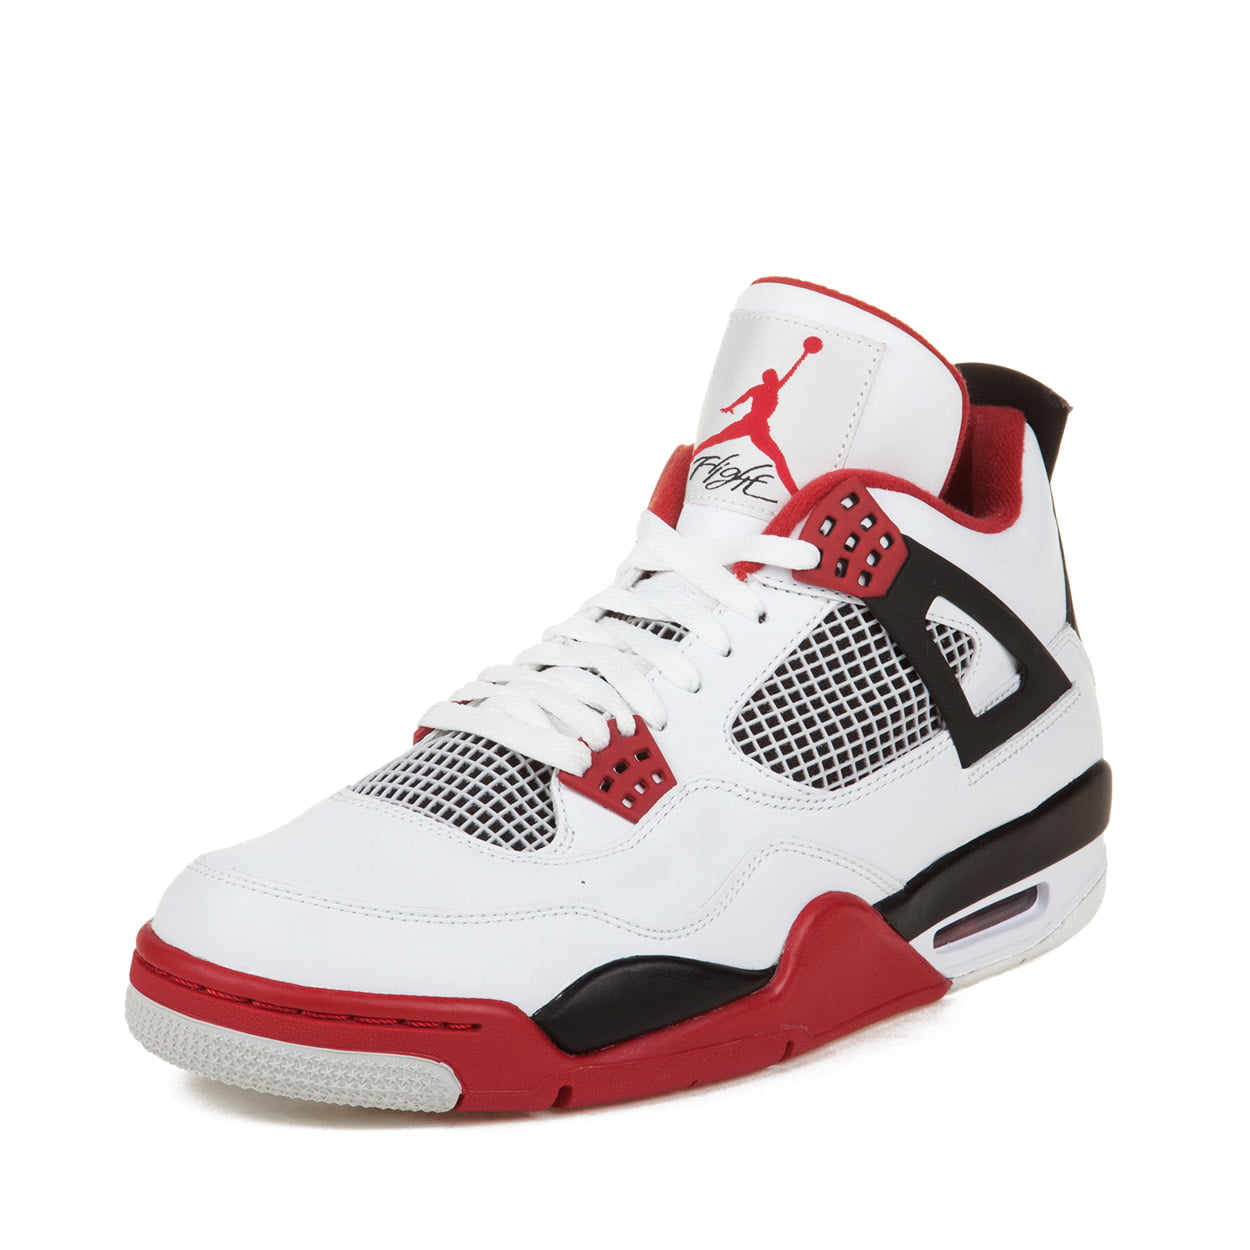 Nike Air Jordan 4 Retro "Fire Red" White/Varsity Red 308497-110 - Walmart.com